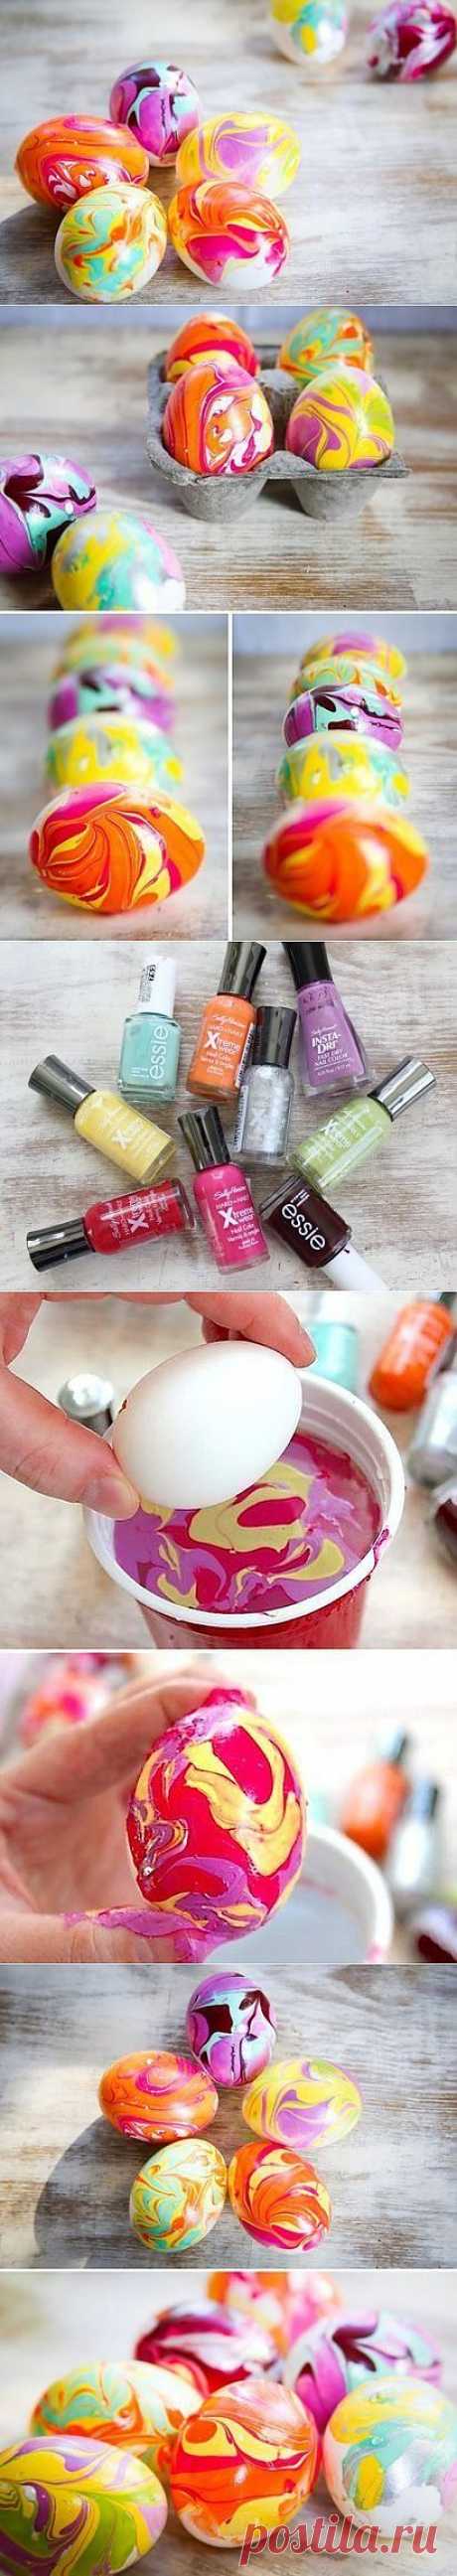 Как покрасить яйца на Пасху - мраморный дизайн.